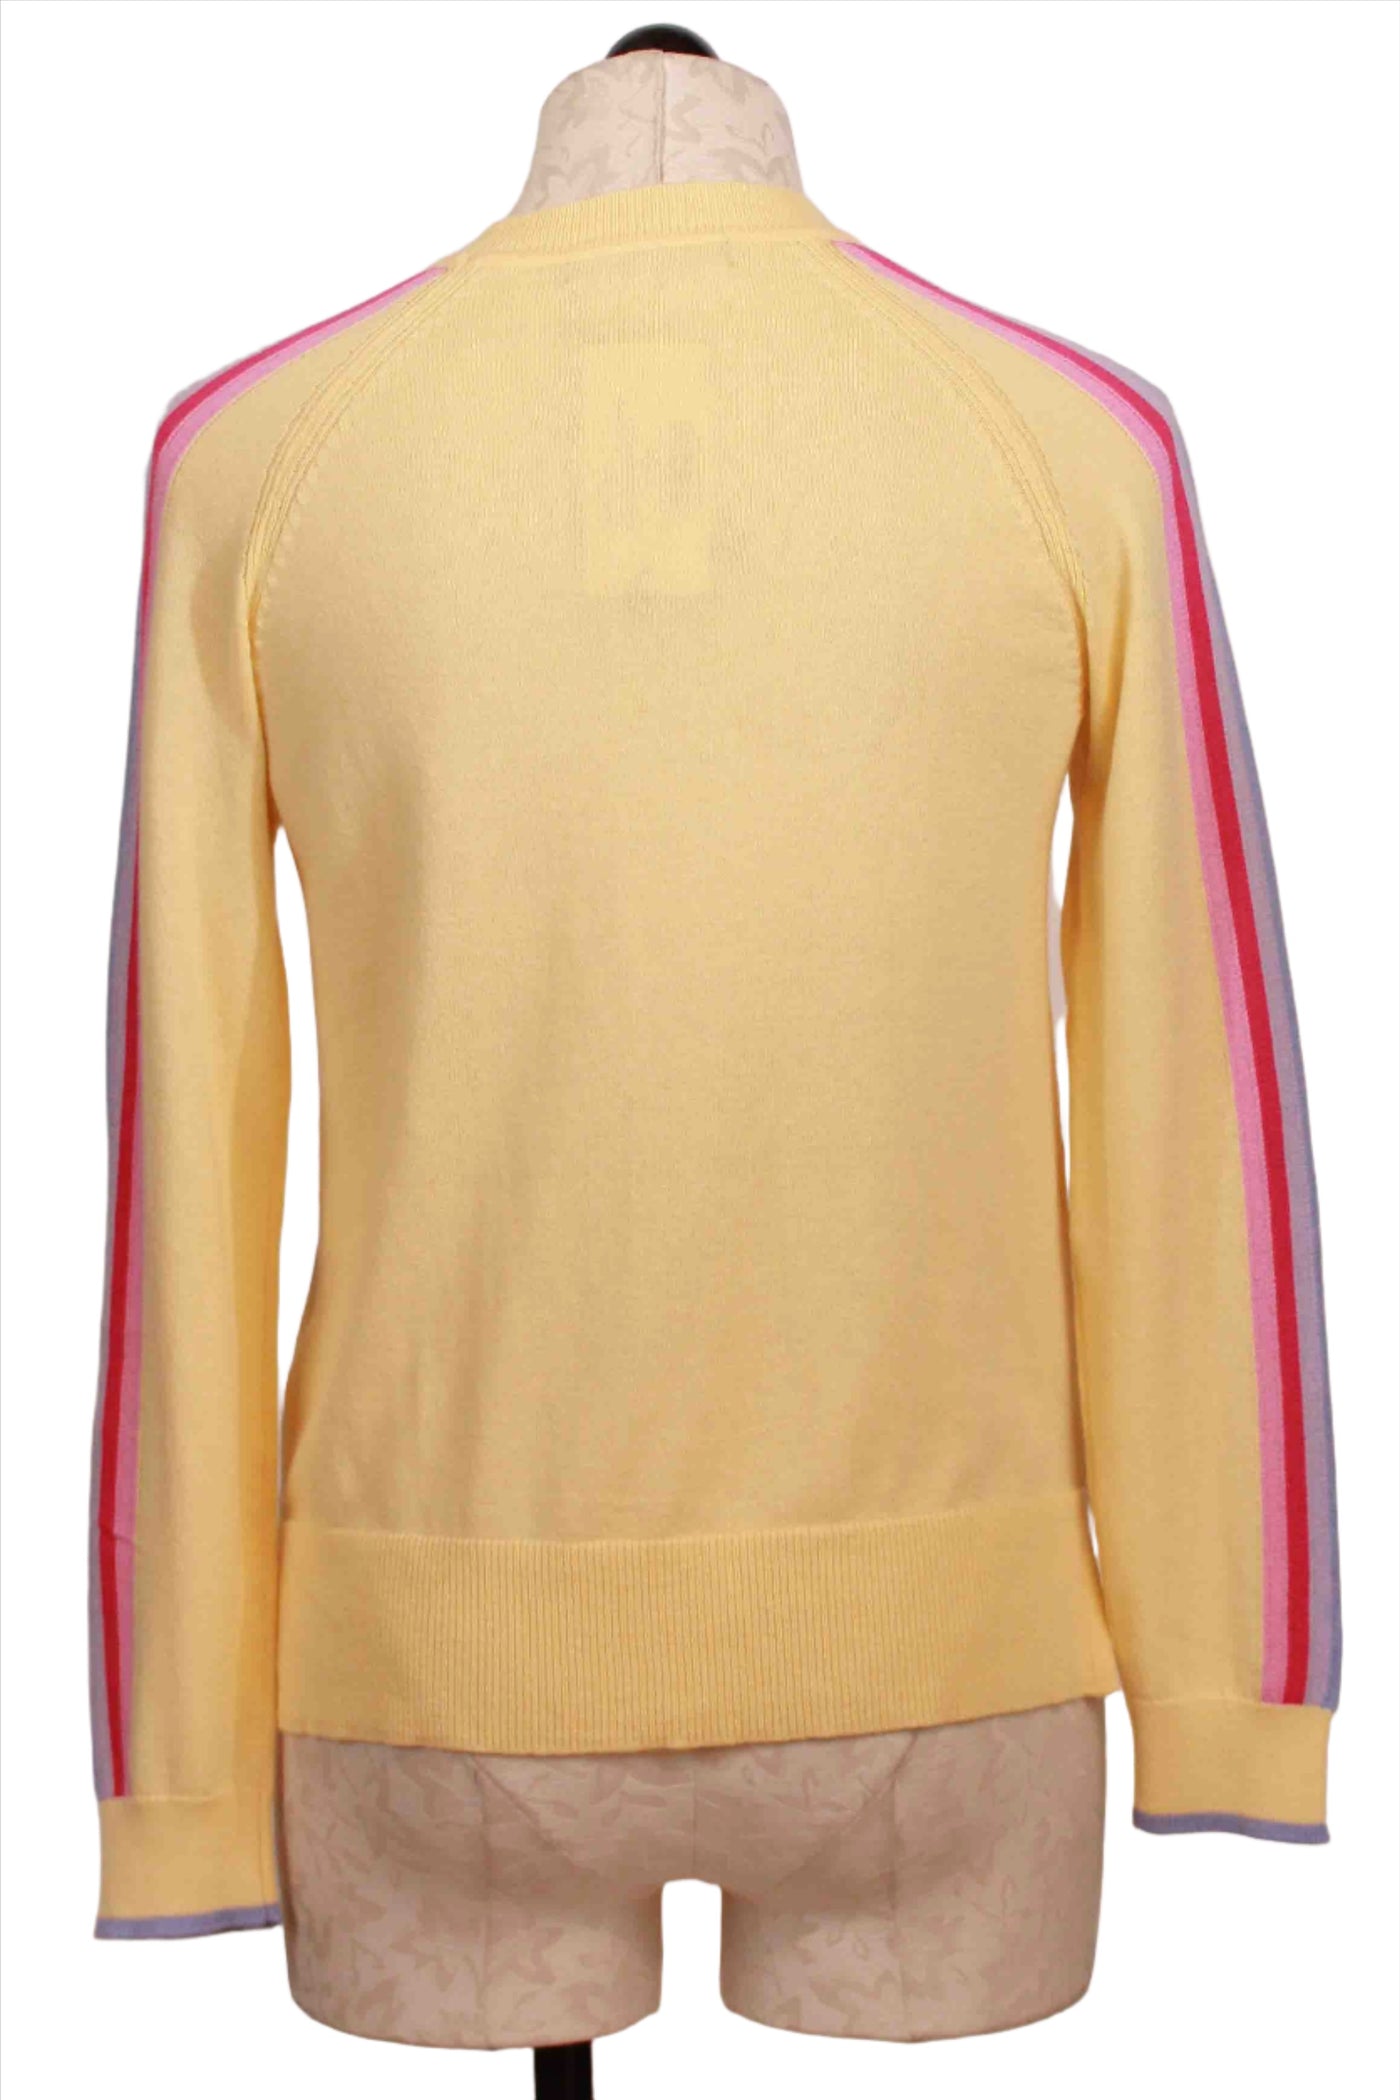 back view of Blondie colored Runaway Stripe Raglan Sleeve Sweater by Alashan Cashmere